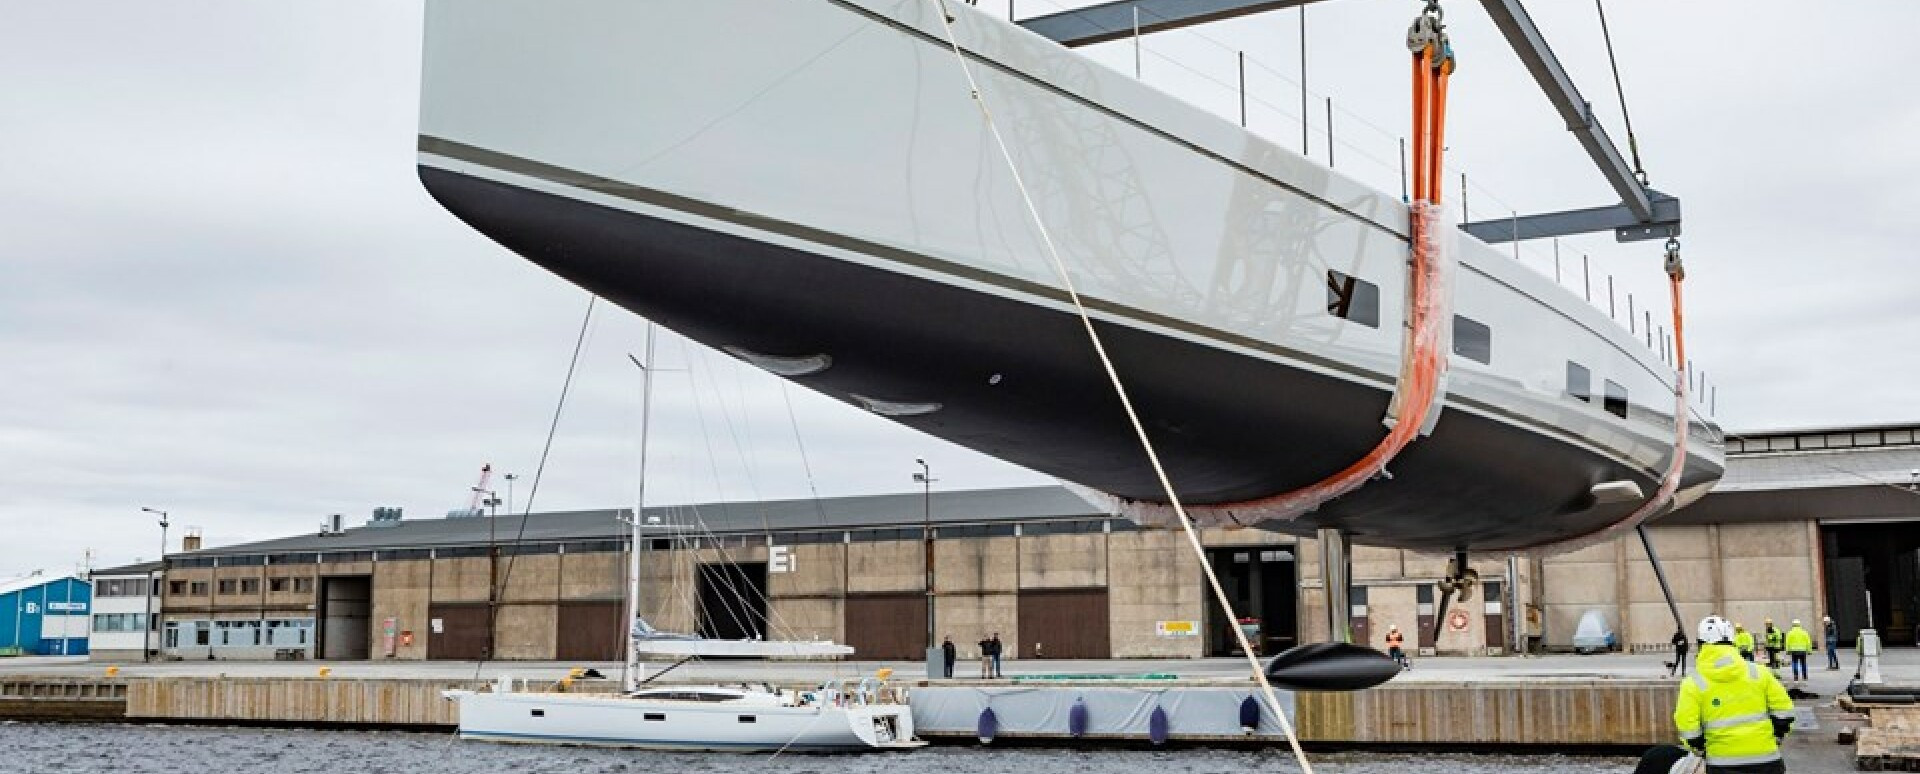                                                                                                     Baltic Yachts launch innovative foiling sailing superyacht Canova
                                                                                            